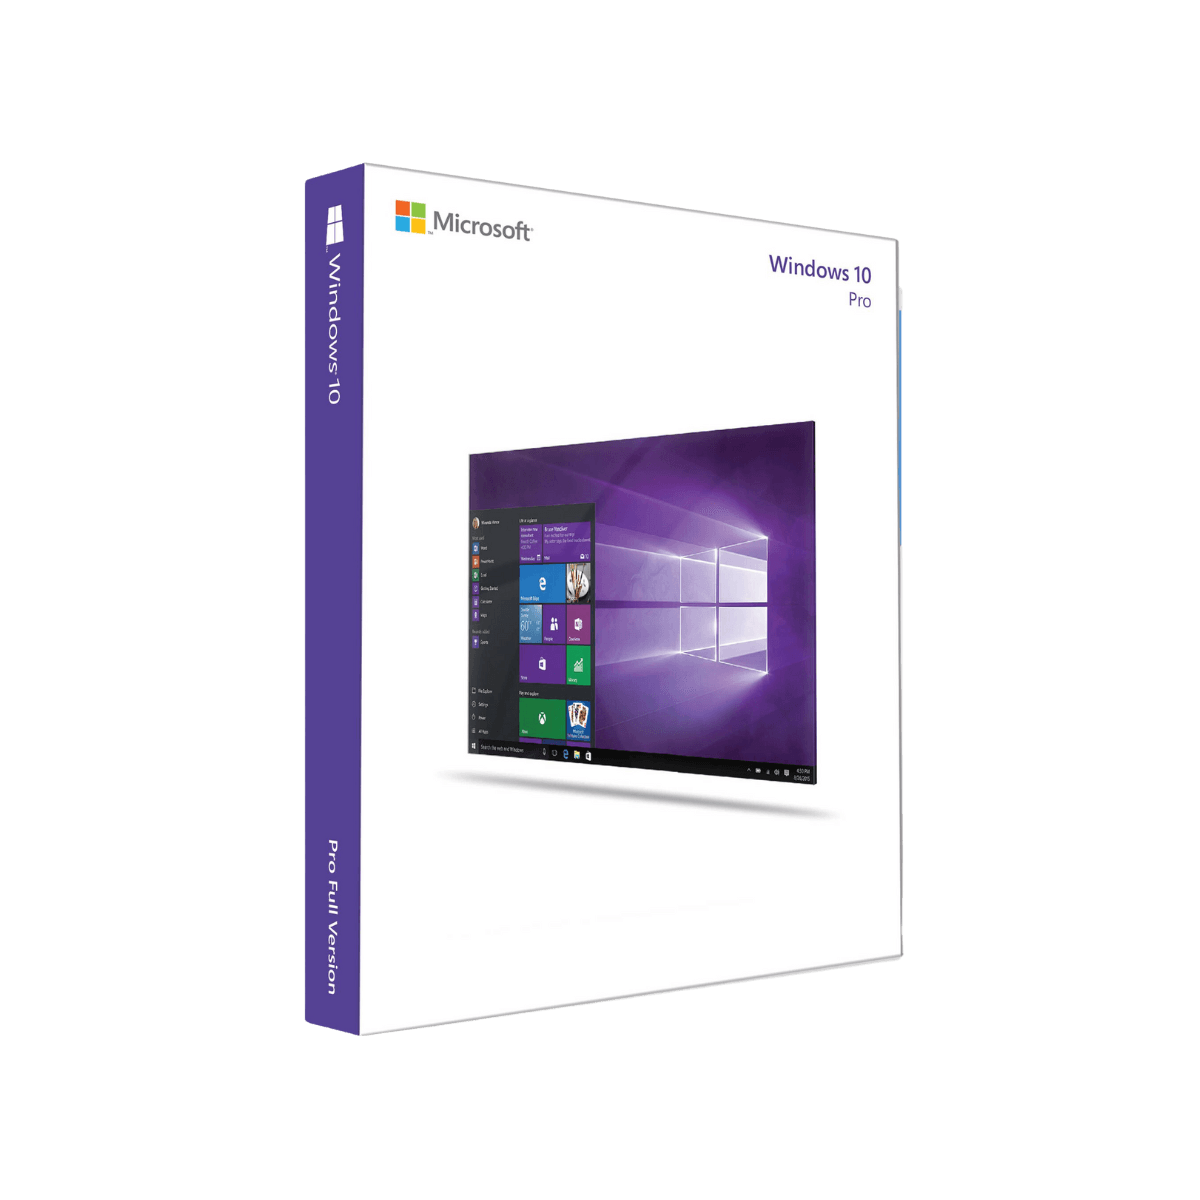 Microsoft Windows 10 Professional - validvalley.com - Chave do produto, Chiave del prodotto, Clave del producto, Product Key, Produktschlüssel, Ürün Anahtarı